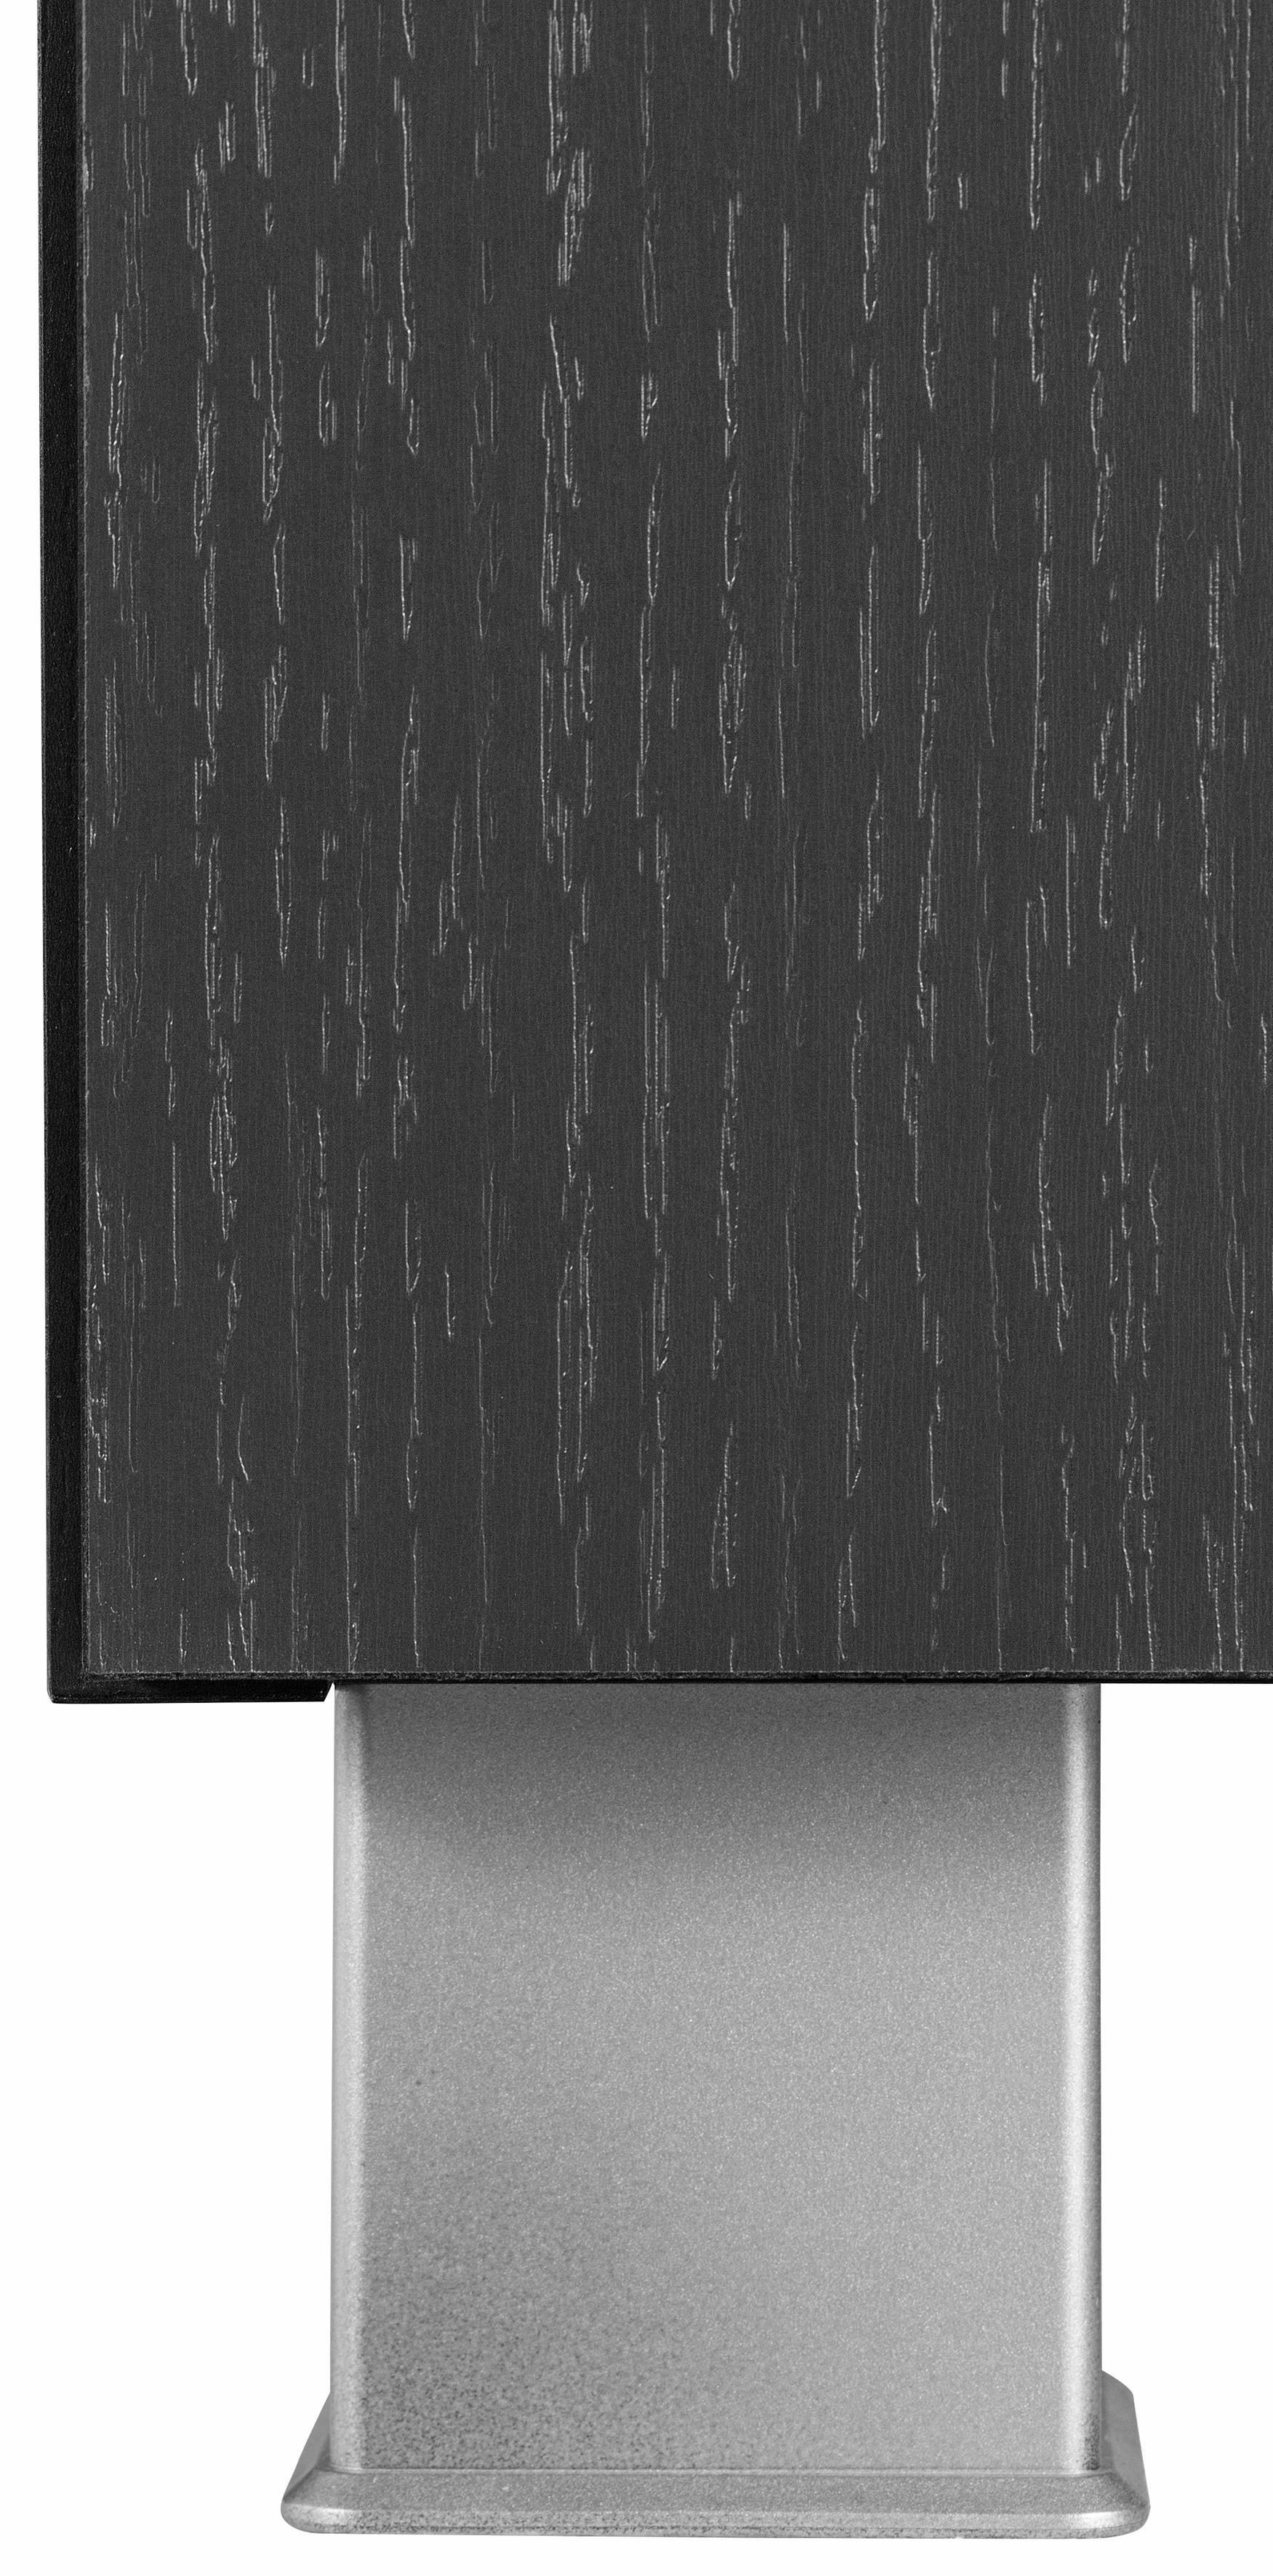 Midischrank MÖBEL Portofino graphitgrau HELD | graphit/graphit